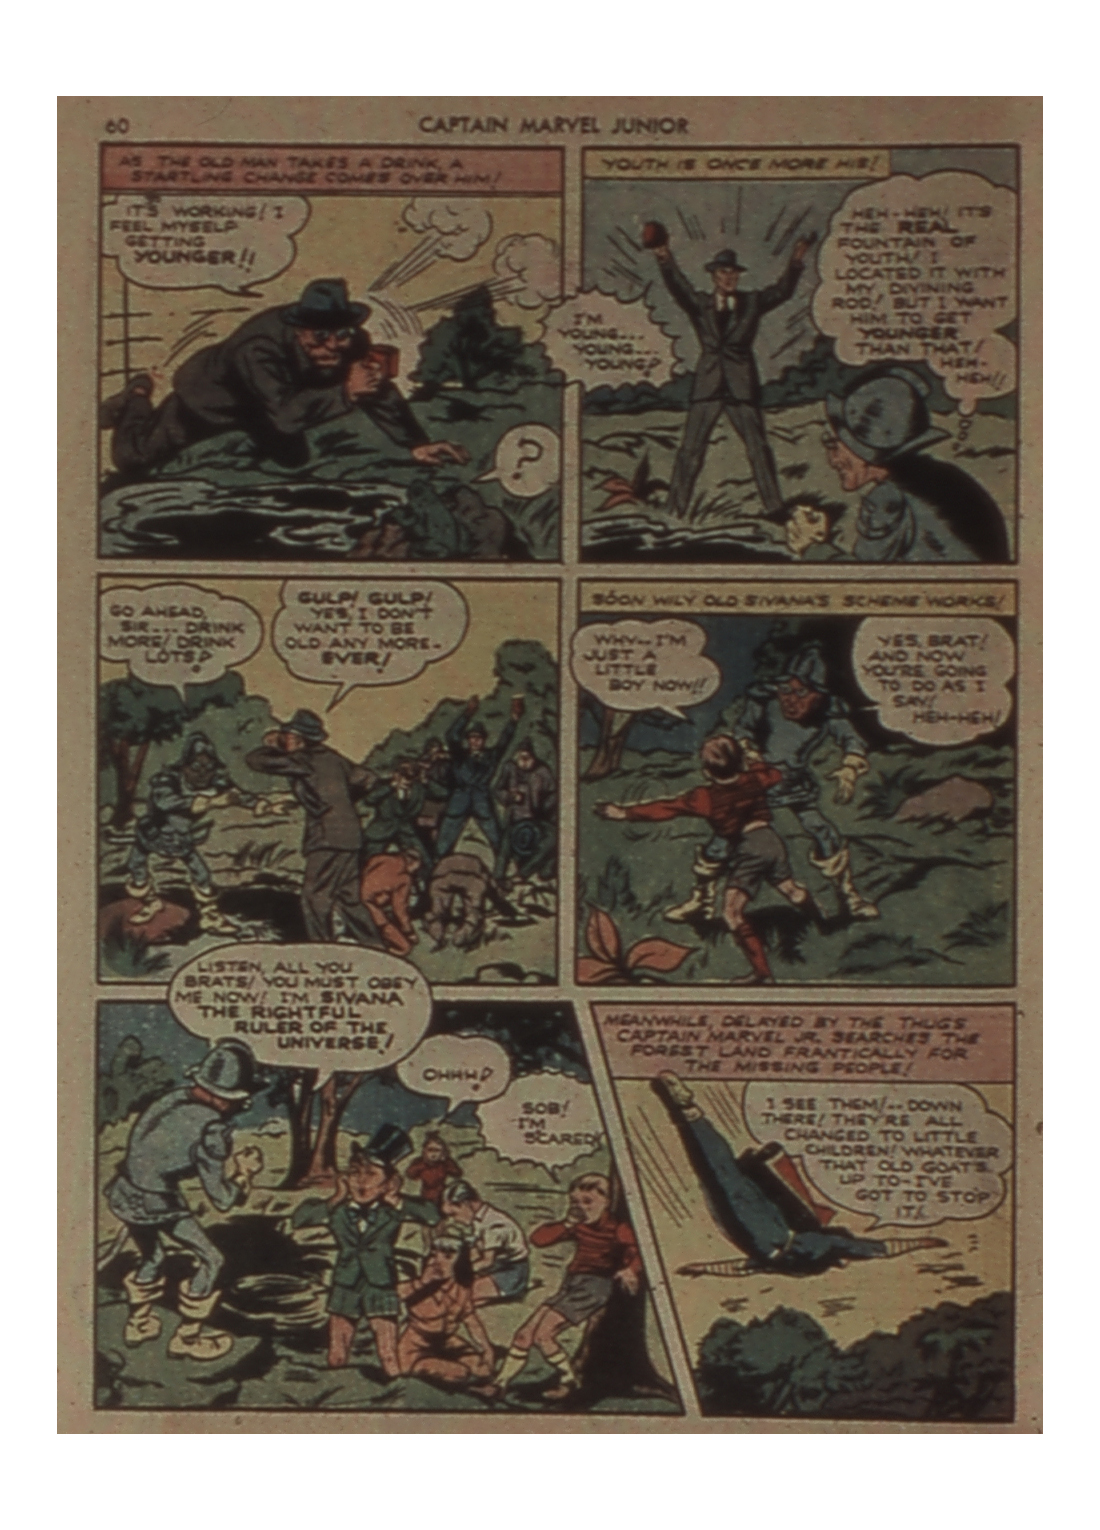 Read online Captain Marvel, Jr. comic -  Issue #5 - 60